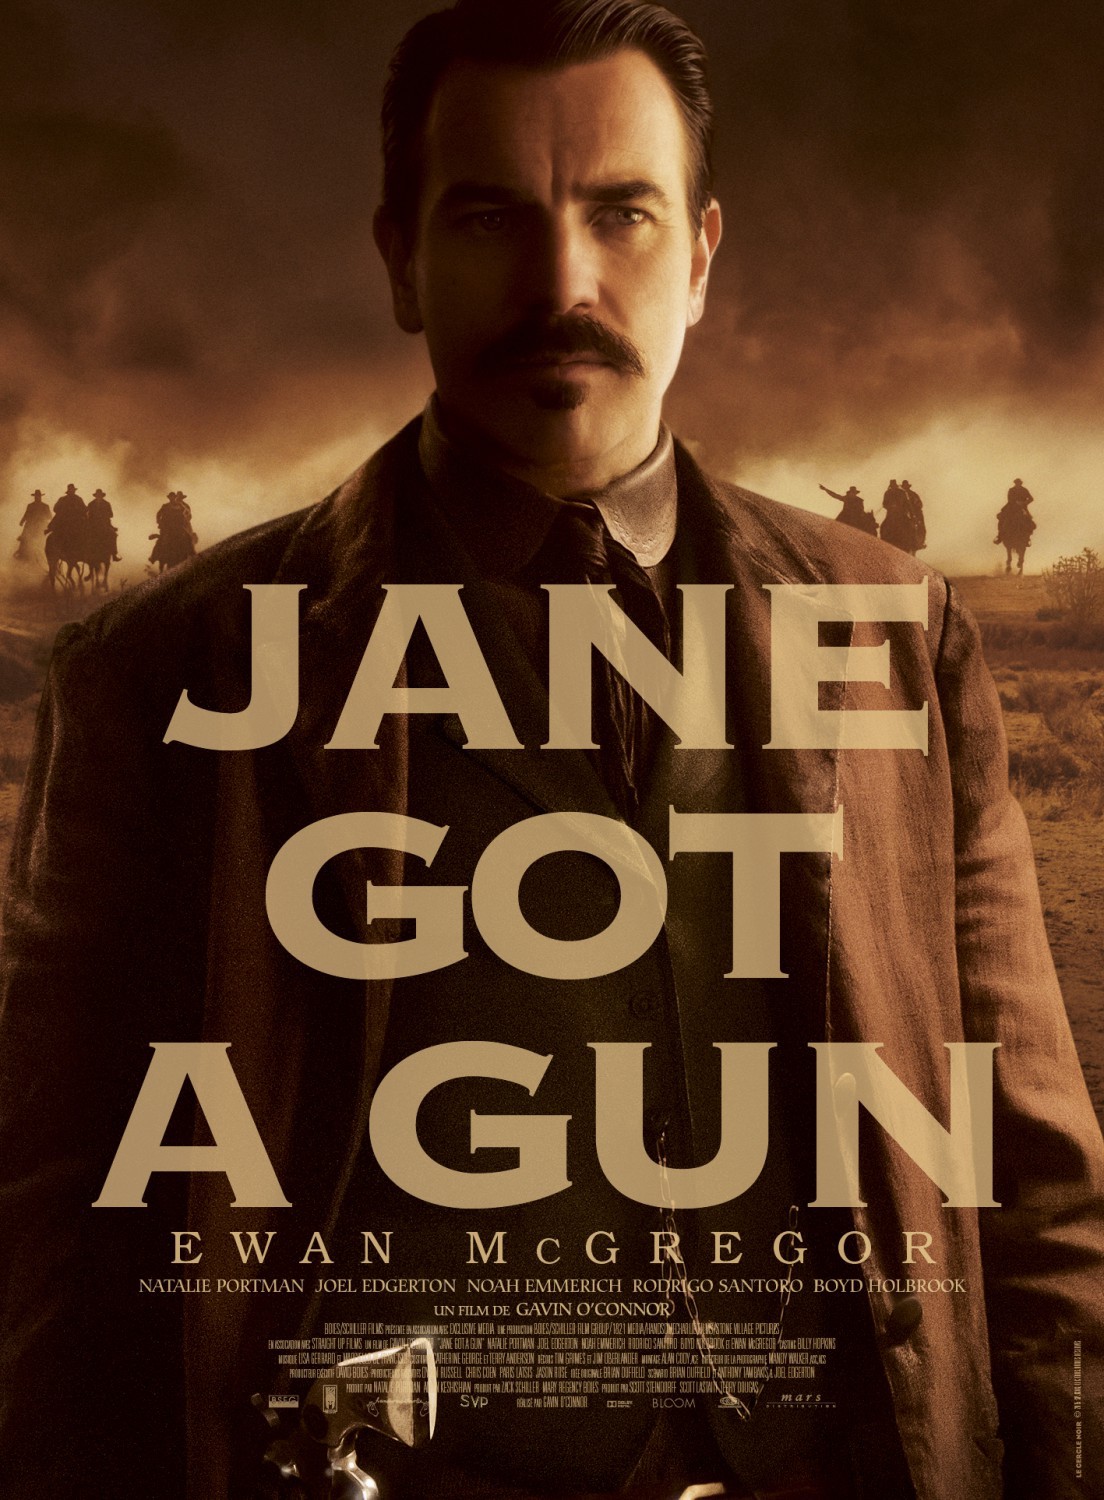 Ewan McGregor in Jane Got a Gun (2016)